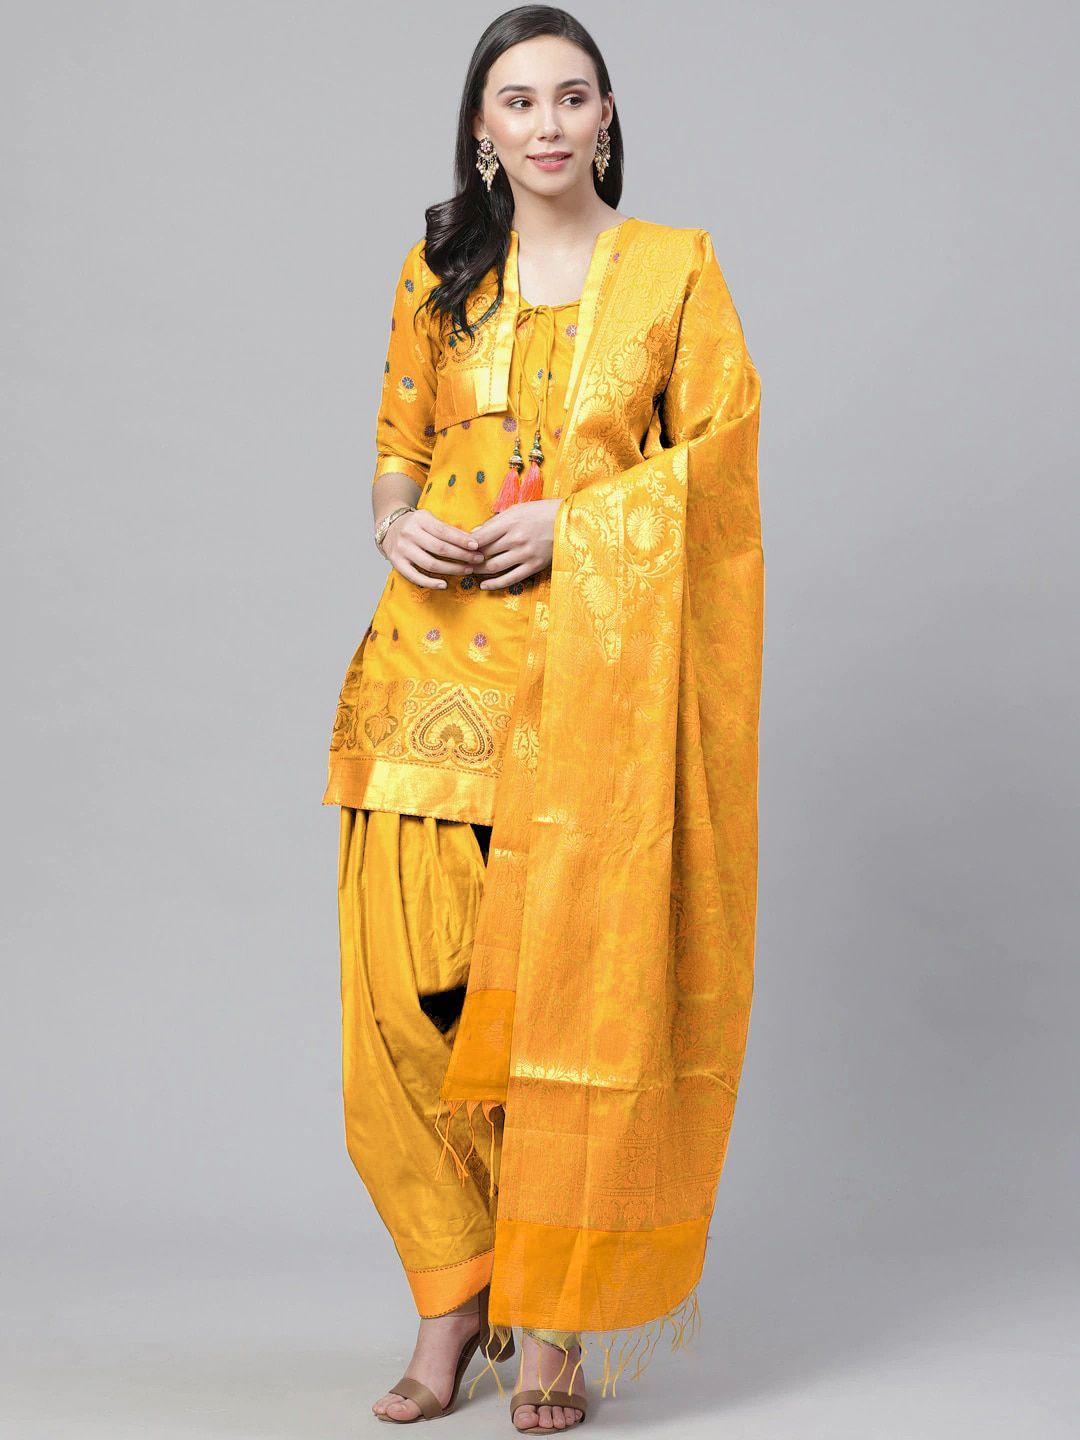 chhabra-555-women-mustard-yellow-ethnic-motifs-embroidered-chanderi-cotton-kurti-with-patiala-&-with-dupatta